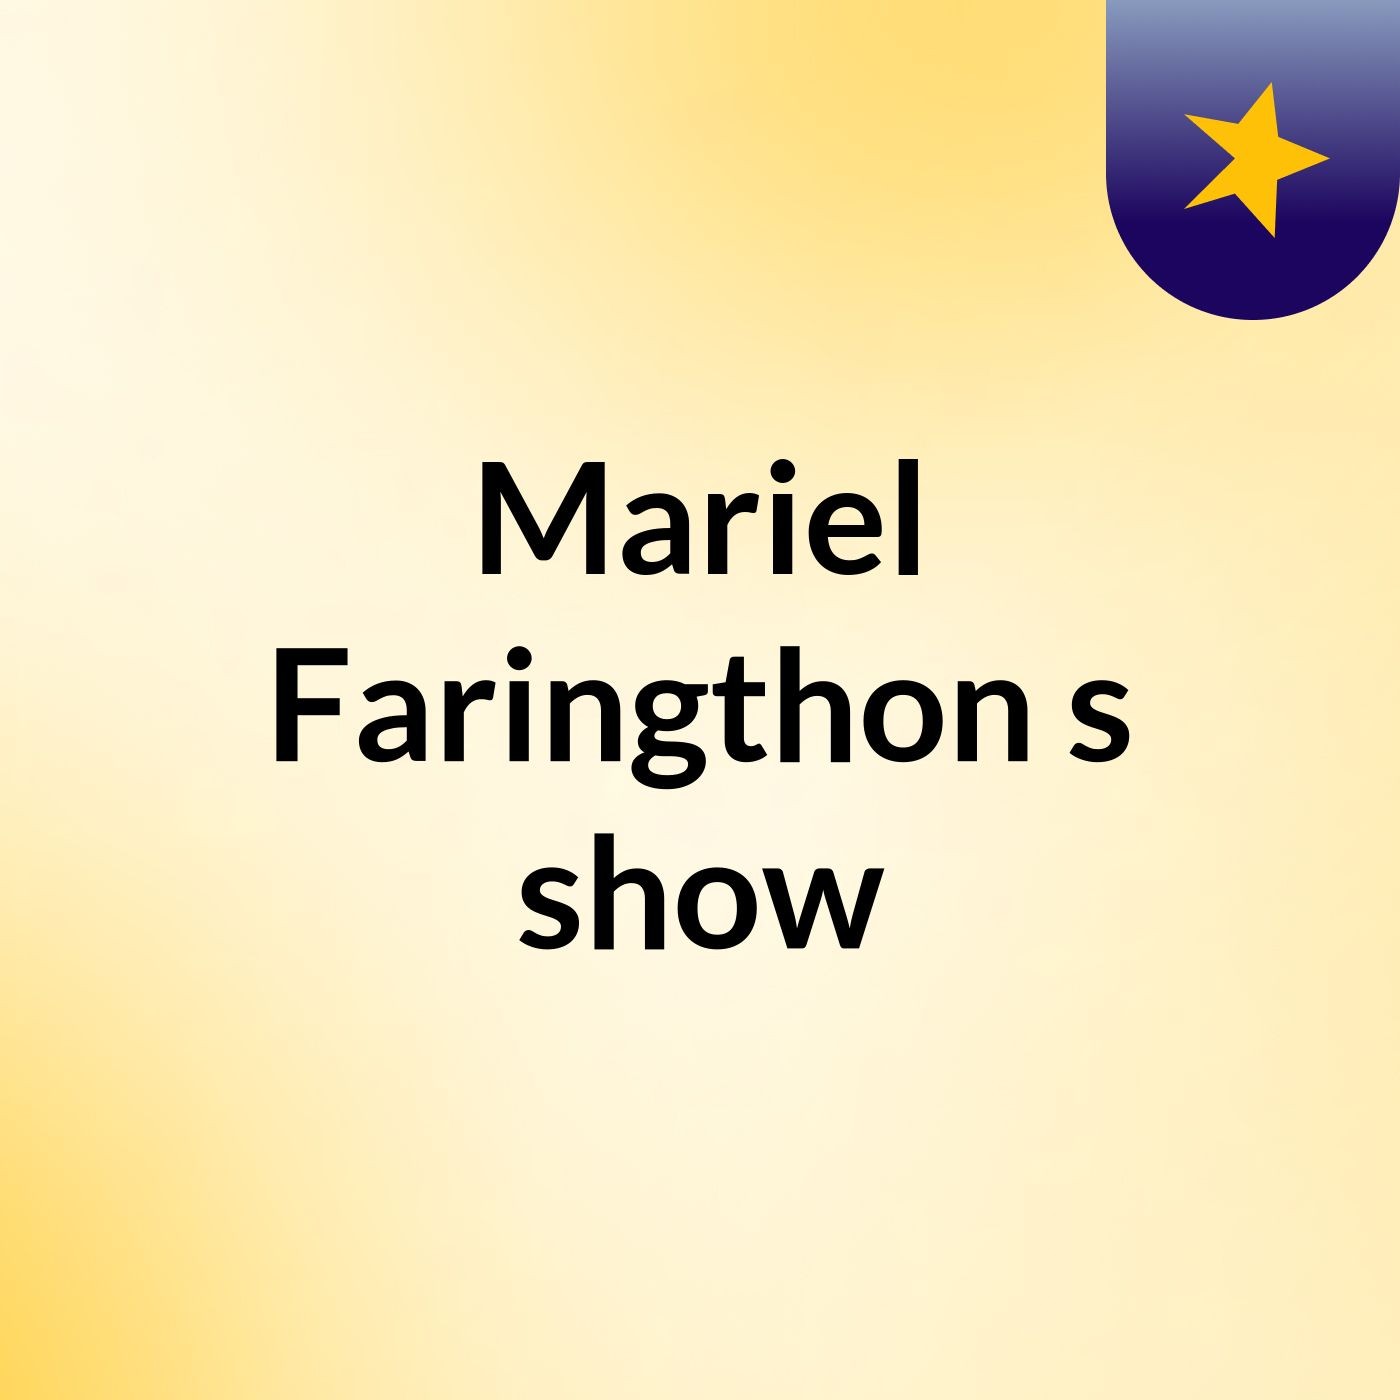 Mariel Faringthon's show